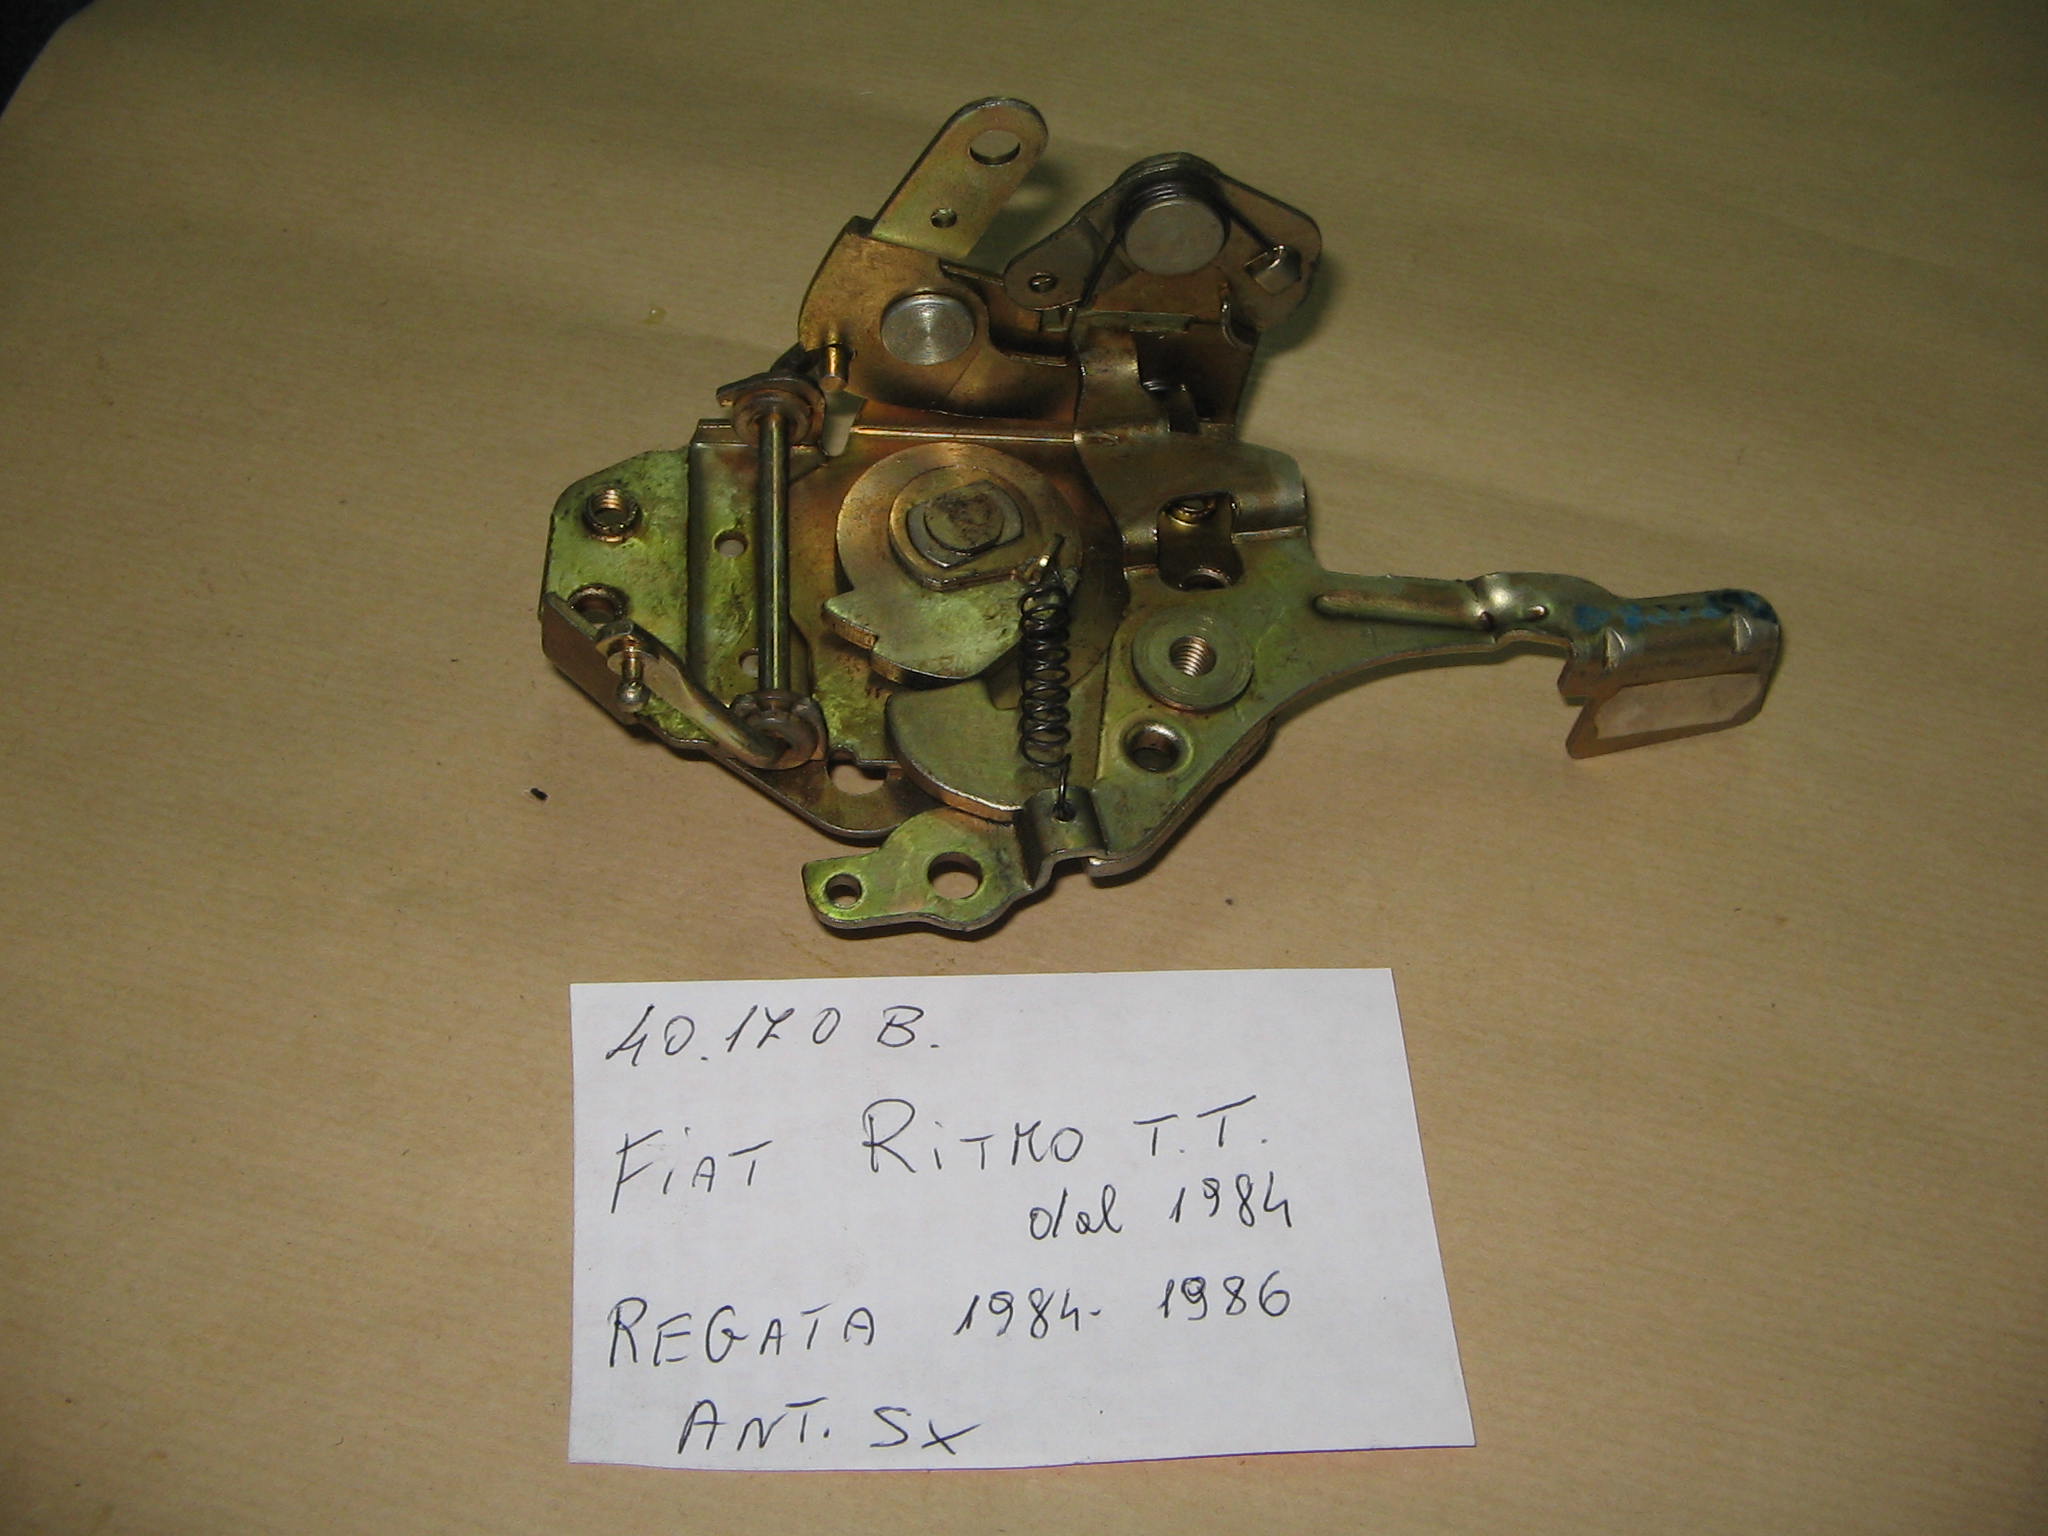 FIAT RITMO T.T. DAL-84- REGATA DAL 84/86 SER.ANT.SX  N.20651